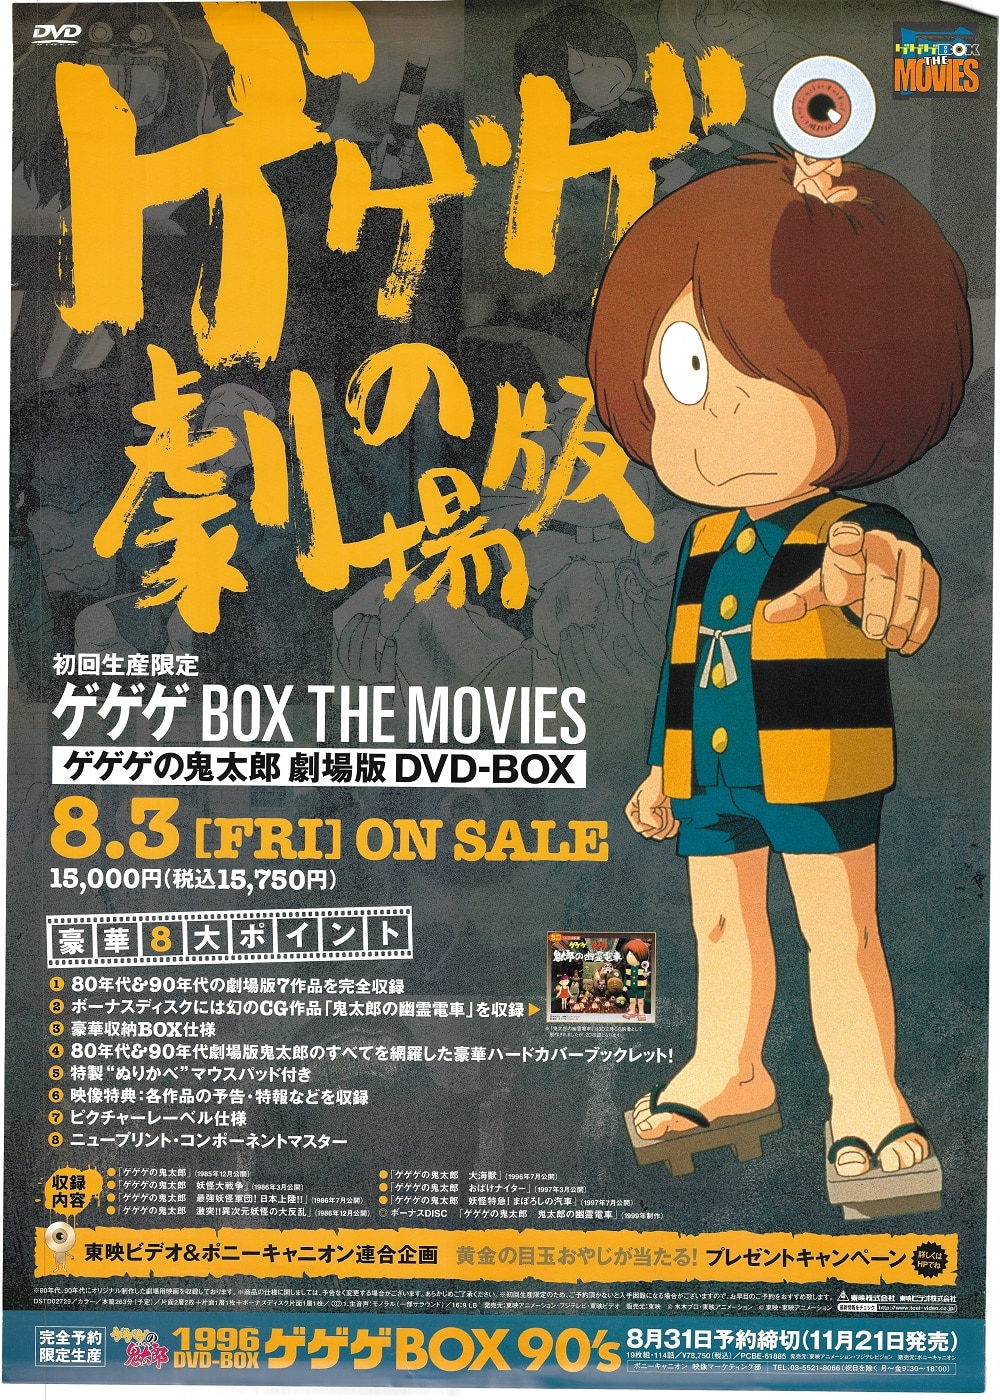 DVD ゲゲゲの鬼太郎 劇場版DVD-BOX ゲゲゲBOX THE MOVIES - DVD